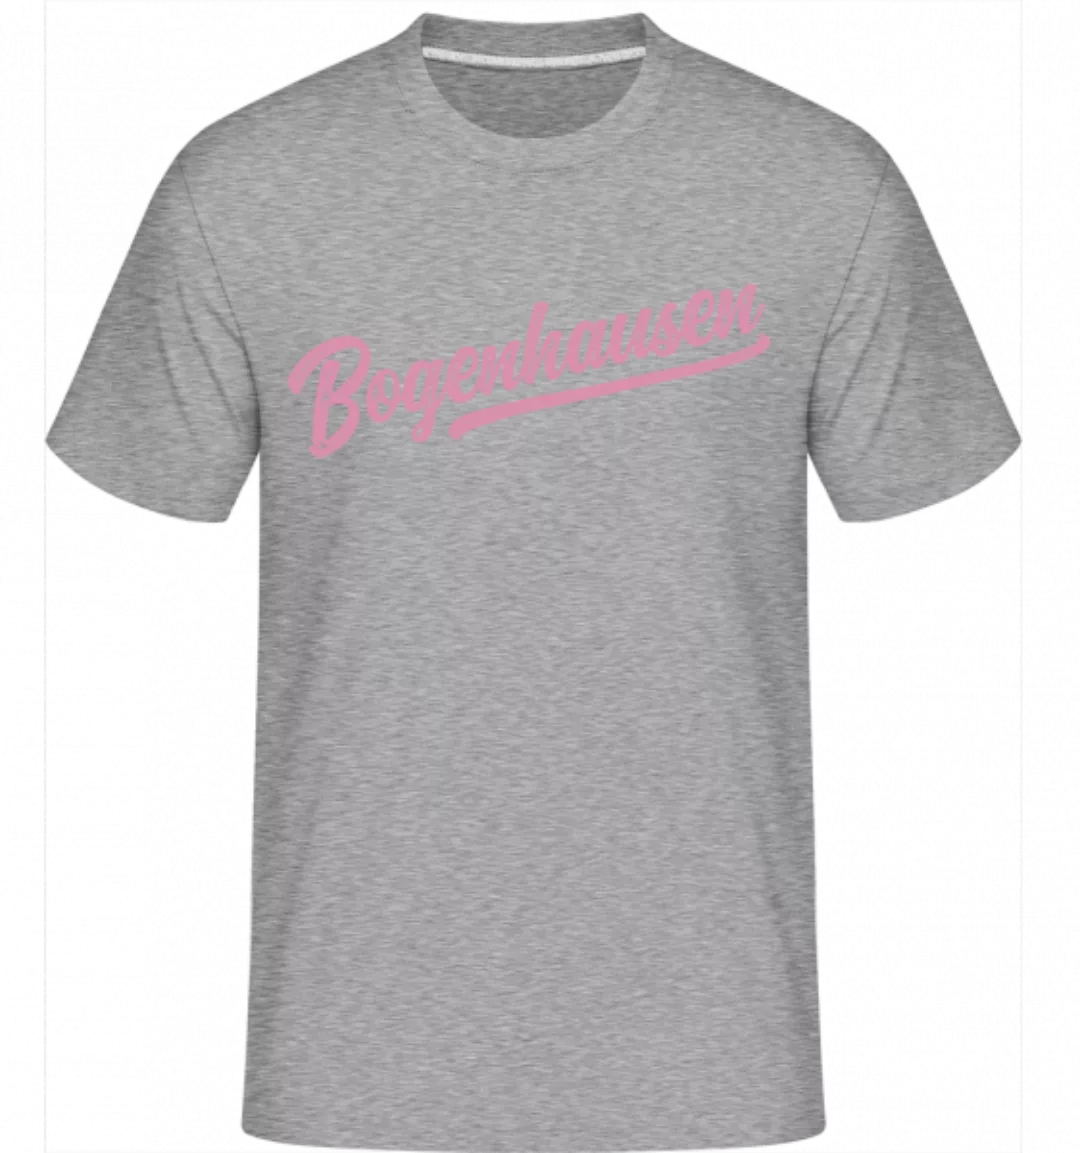 Bogenhausen Swoosh · Shirtinator Männer T-Shirt günstig online kaufen